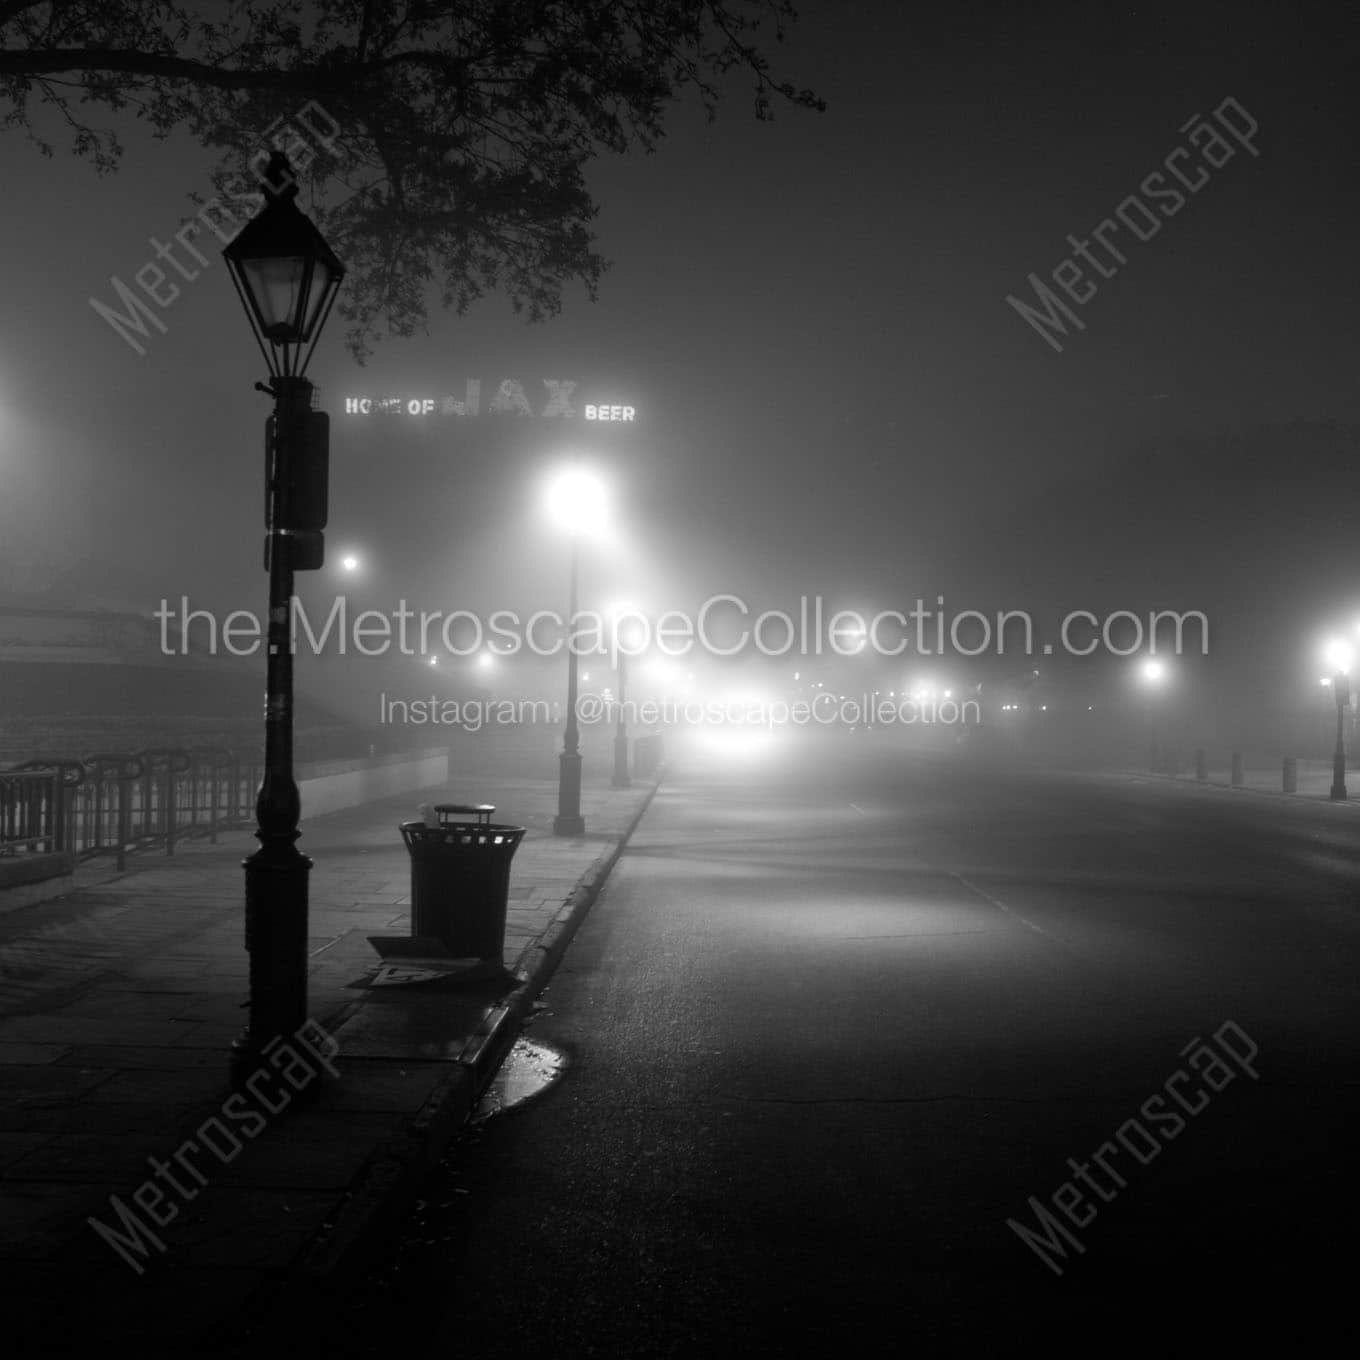 foggy jax brewery at night Black & White Office Art